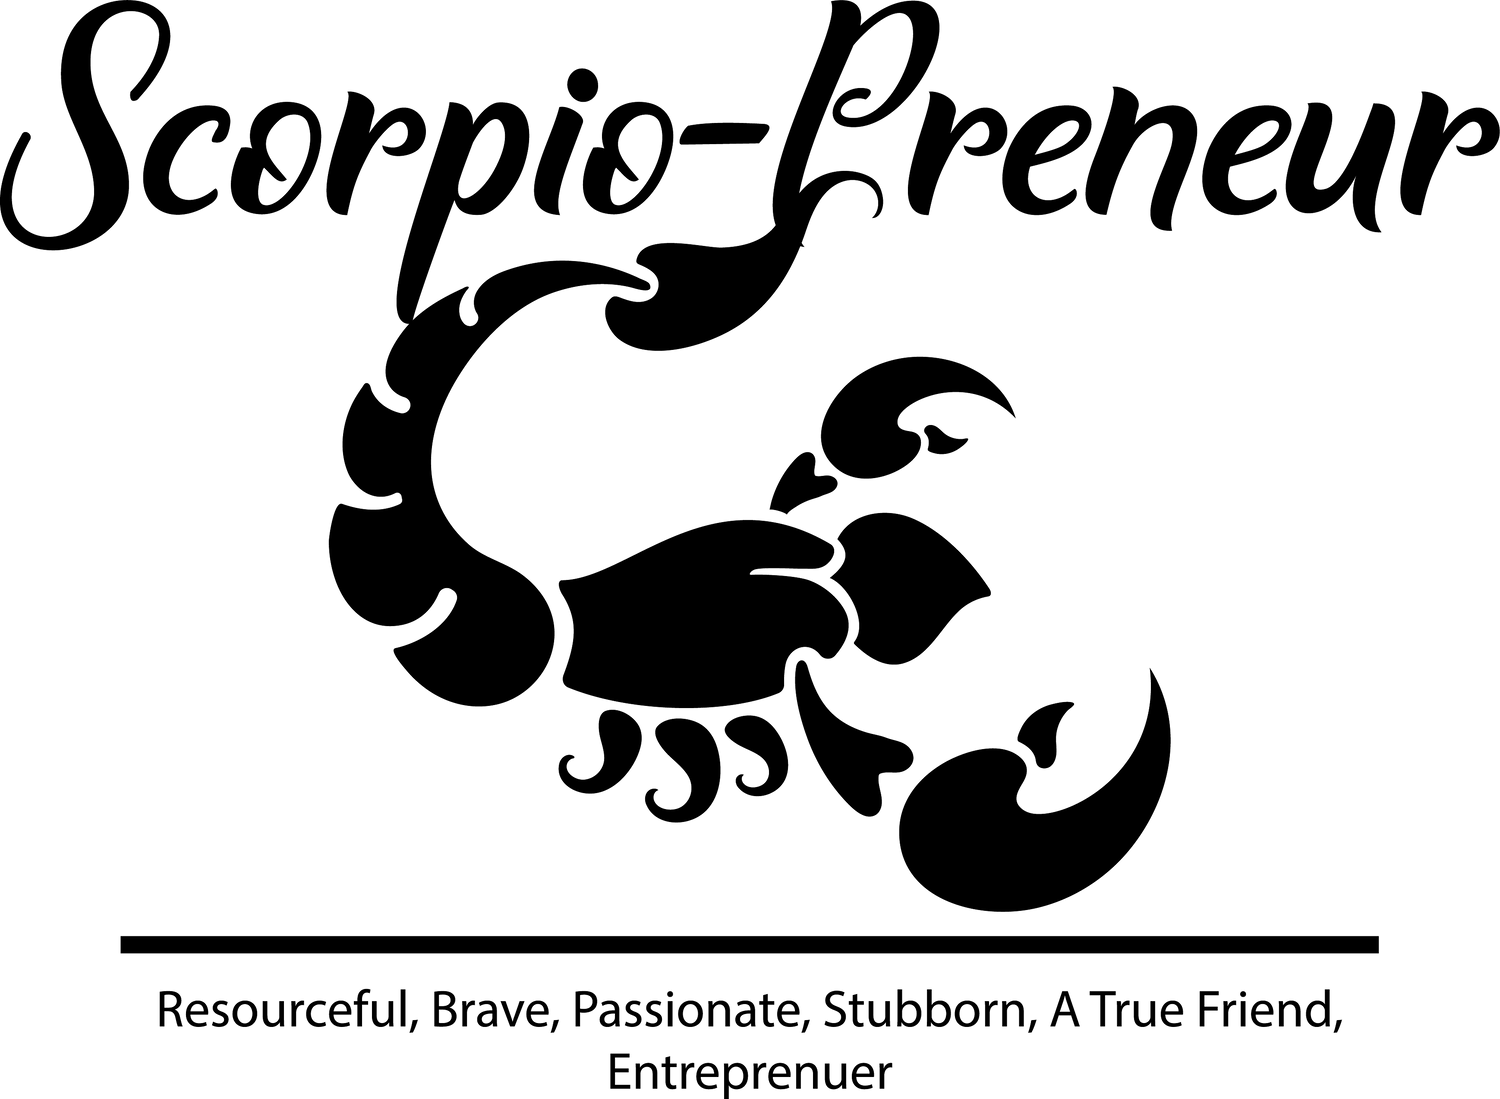 Scorpio-preneur art